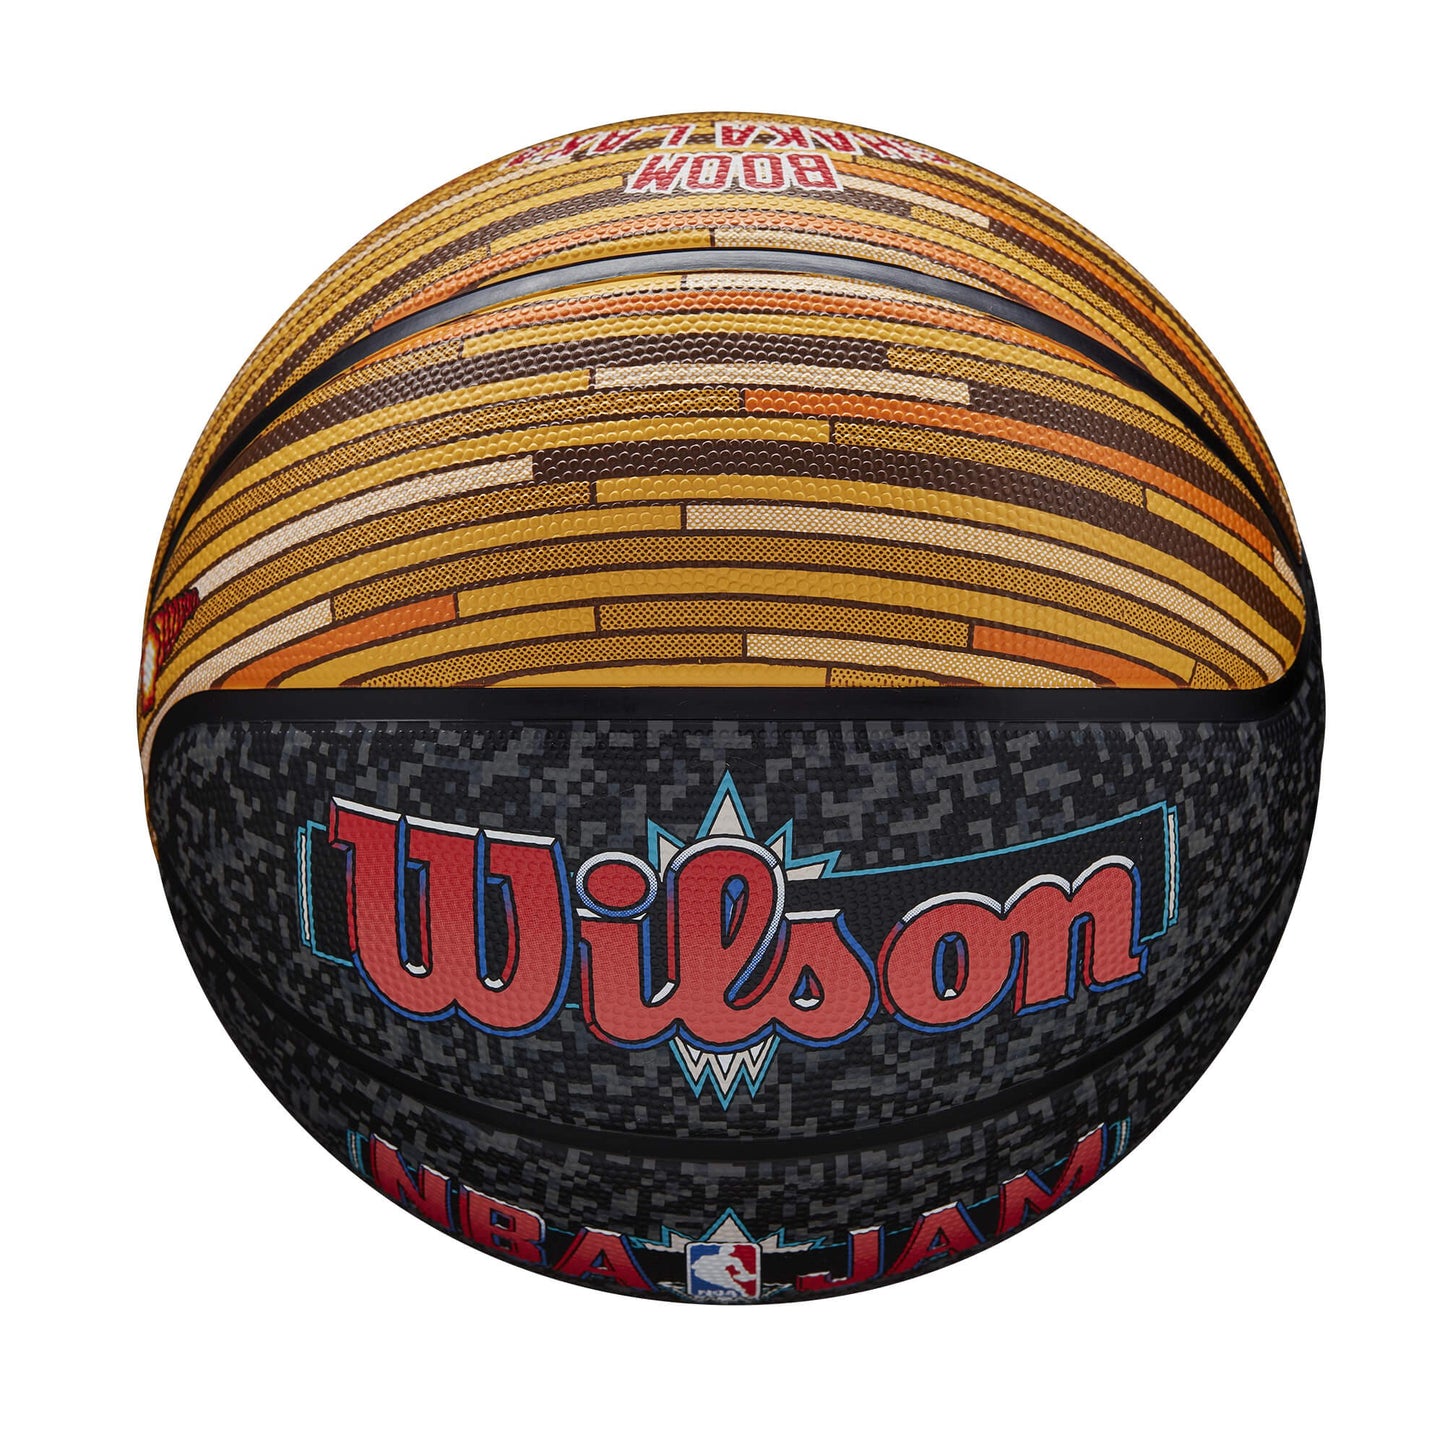 Wilson NBA Jam Outdoor Basketball Ball (sz. 7)